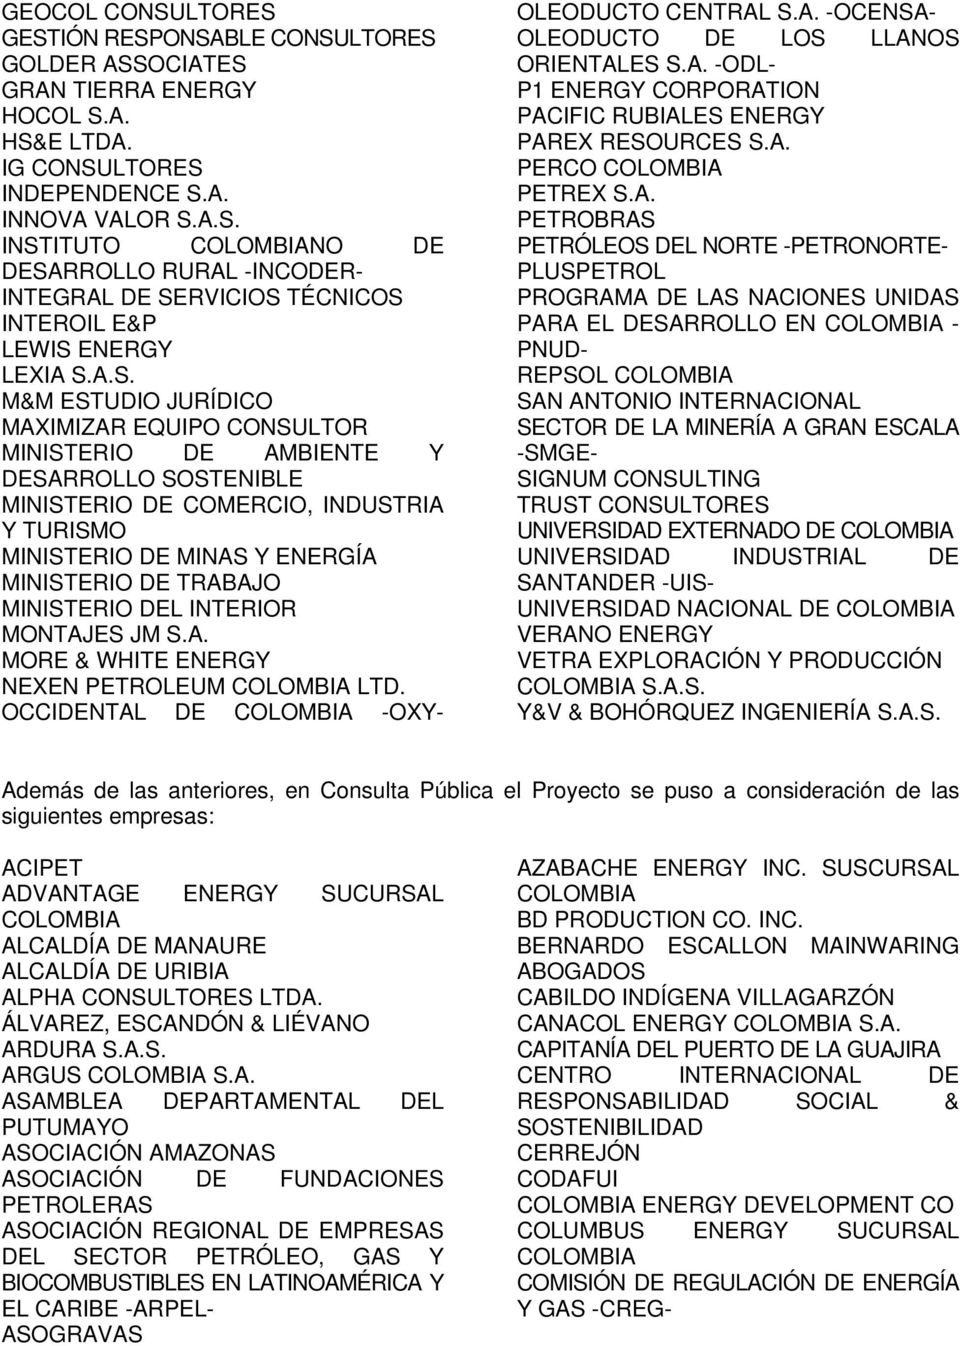 MINISTERIO DEL INTERIOR MONTAJES JM S.A. MORE & WHITE ENERGY NEXEN PETROLEUM COLOMBIA LTD. OCCIDENTAL DE COLOMBIA -OXY- OLEODUCTO CENTRAL S.A. -OCENSA- OLEODUCTO DE LOS LLANOS ORIENTALES S.A. -ODL- P1 ENERGY CORPORATION PACIFIC RUBIALES ENERGY PAREX RESOURCES S.